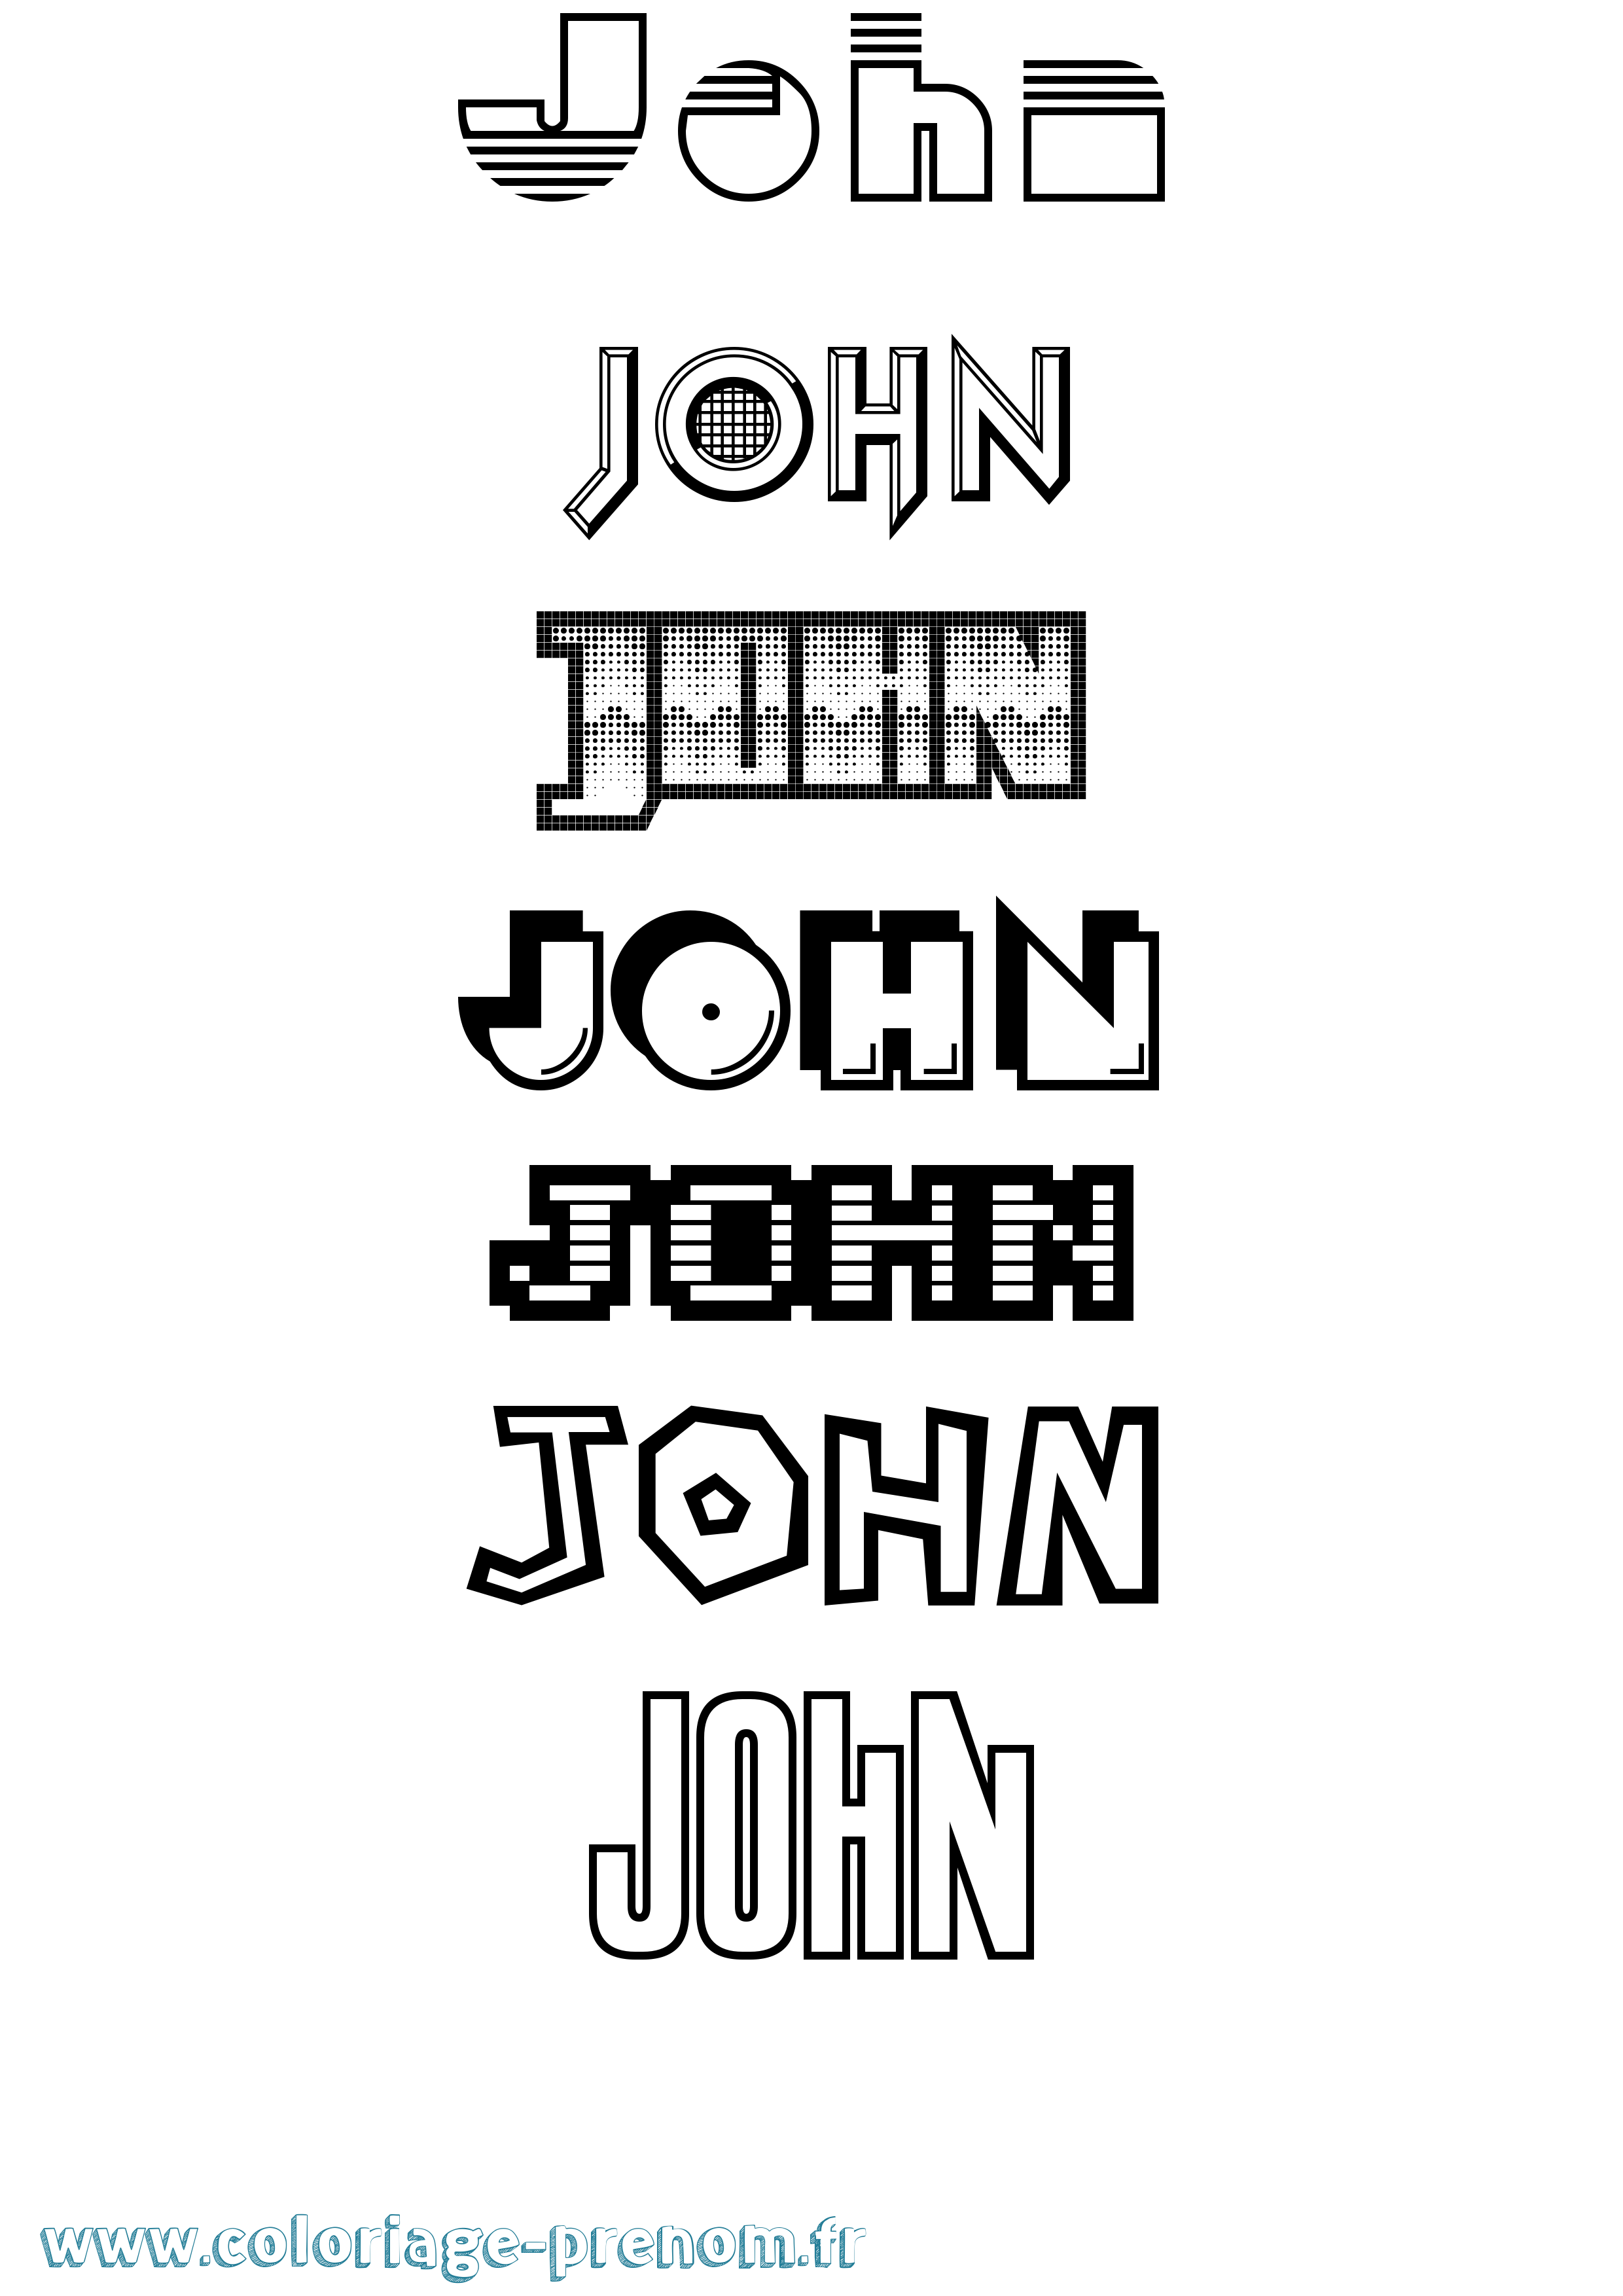 Coloriage prénom John